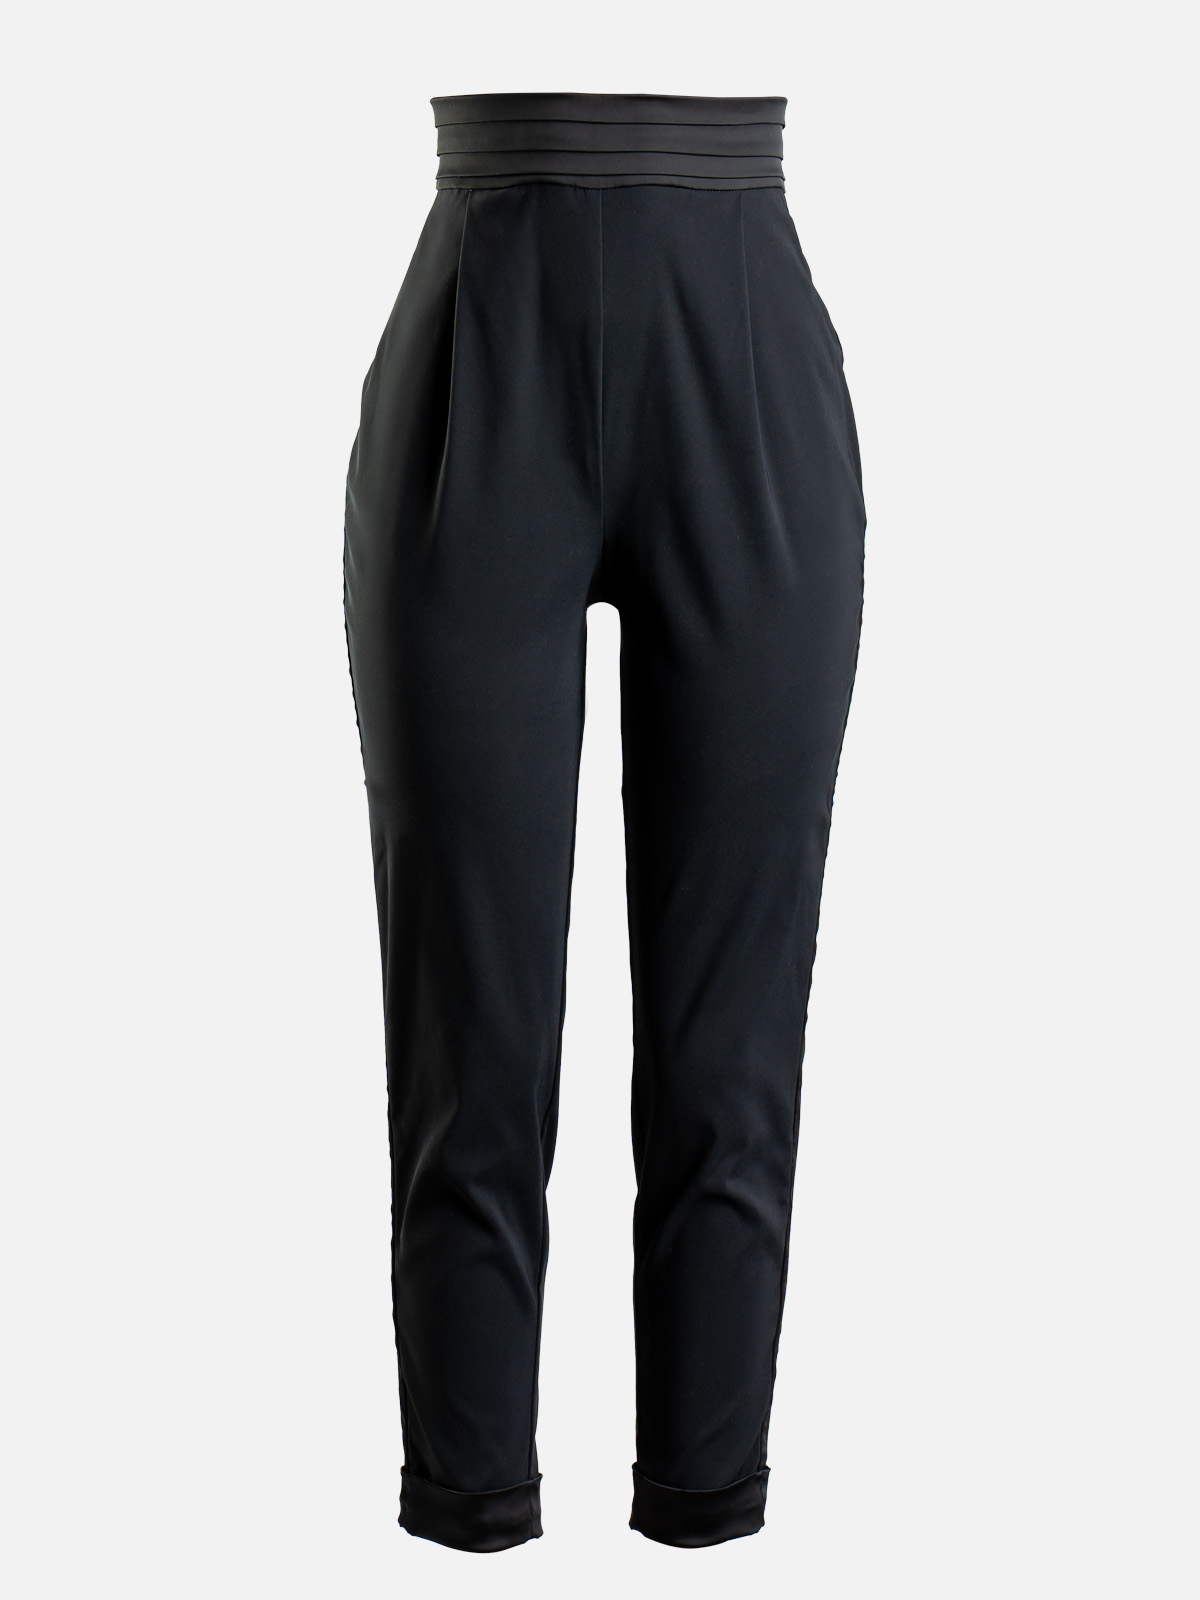 ASOS DESIGN super skinny tuxedo trousers in black with animal side stripe |  ASOS